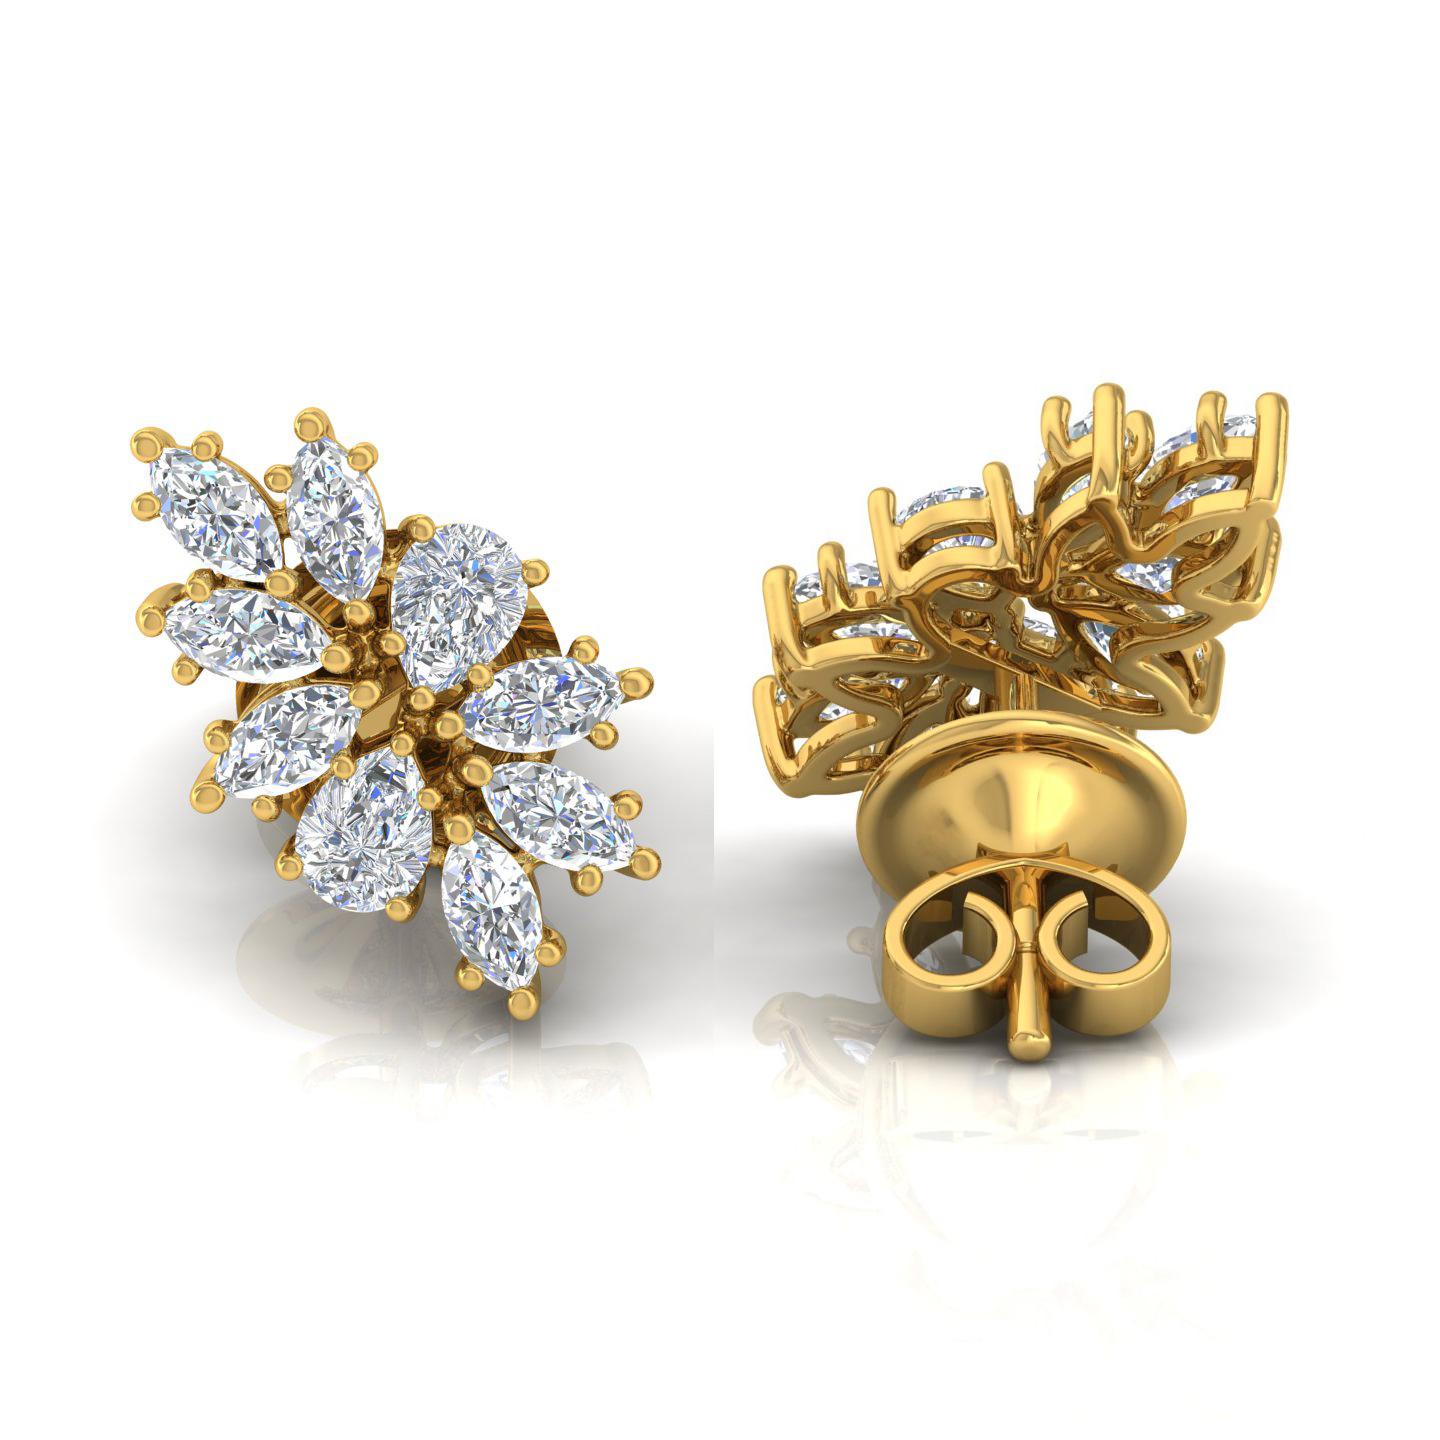 Women's 1.85 Carat Marquise Pear Diamond Earrings 18 Karat Yellow Gold Handmade Jewelry For Sale